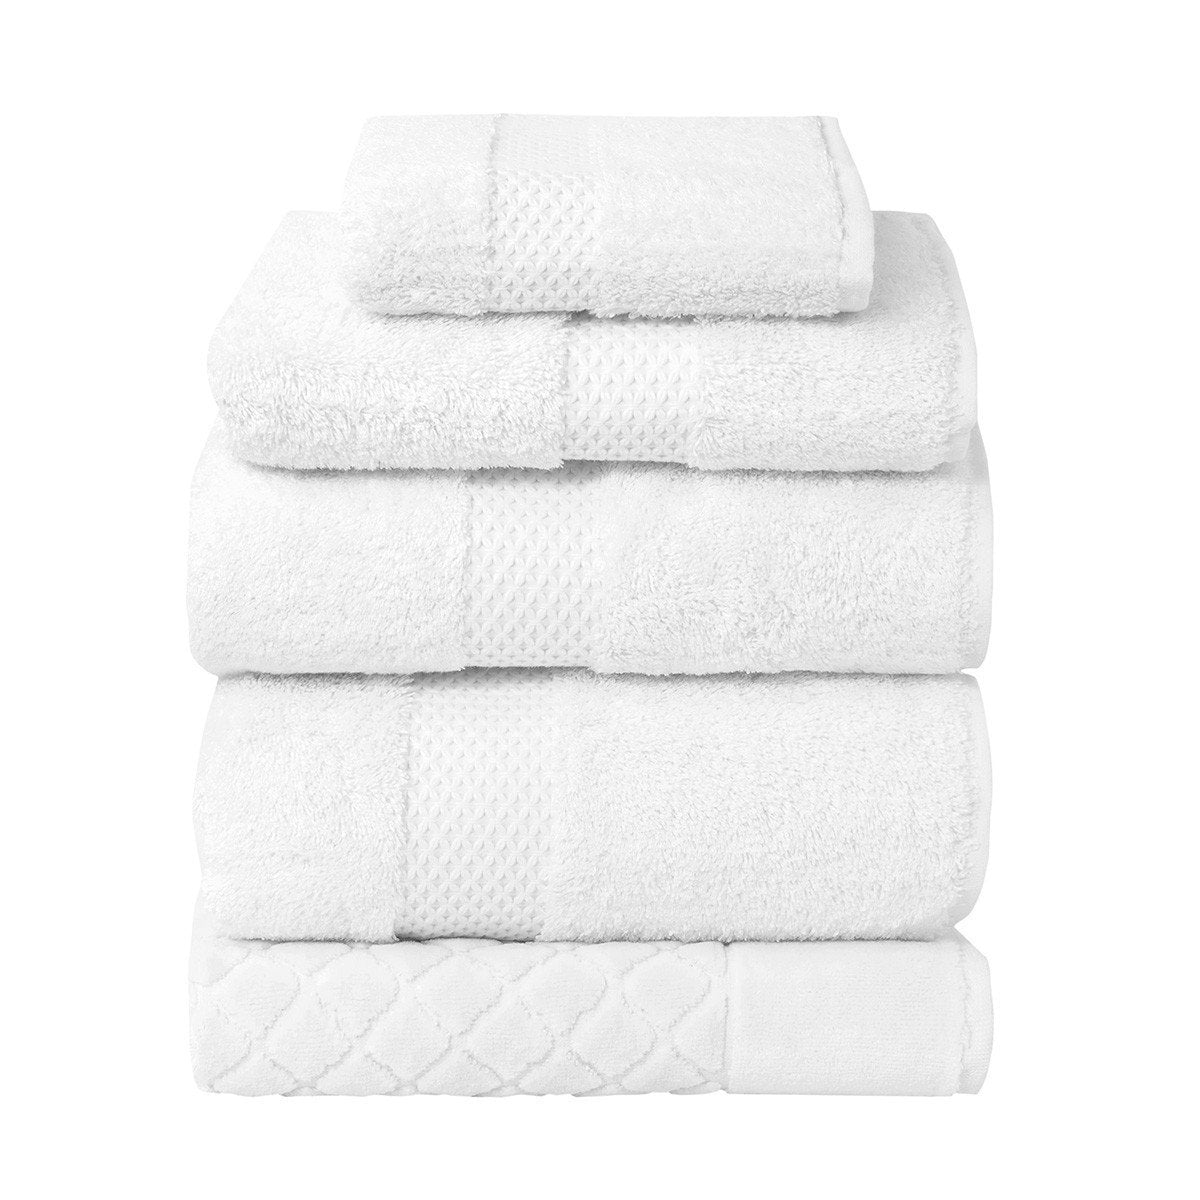 Etoile Bath Towels